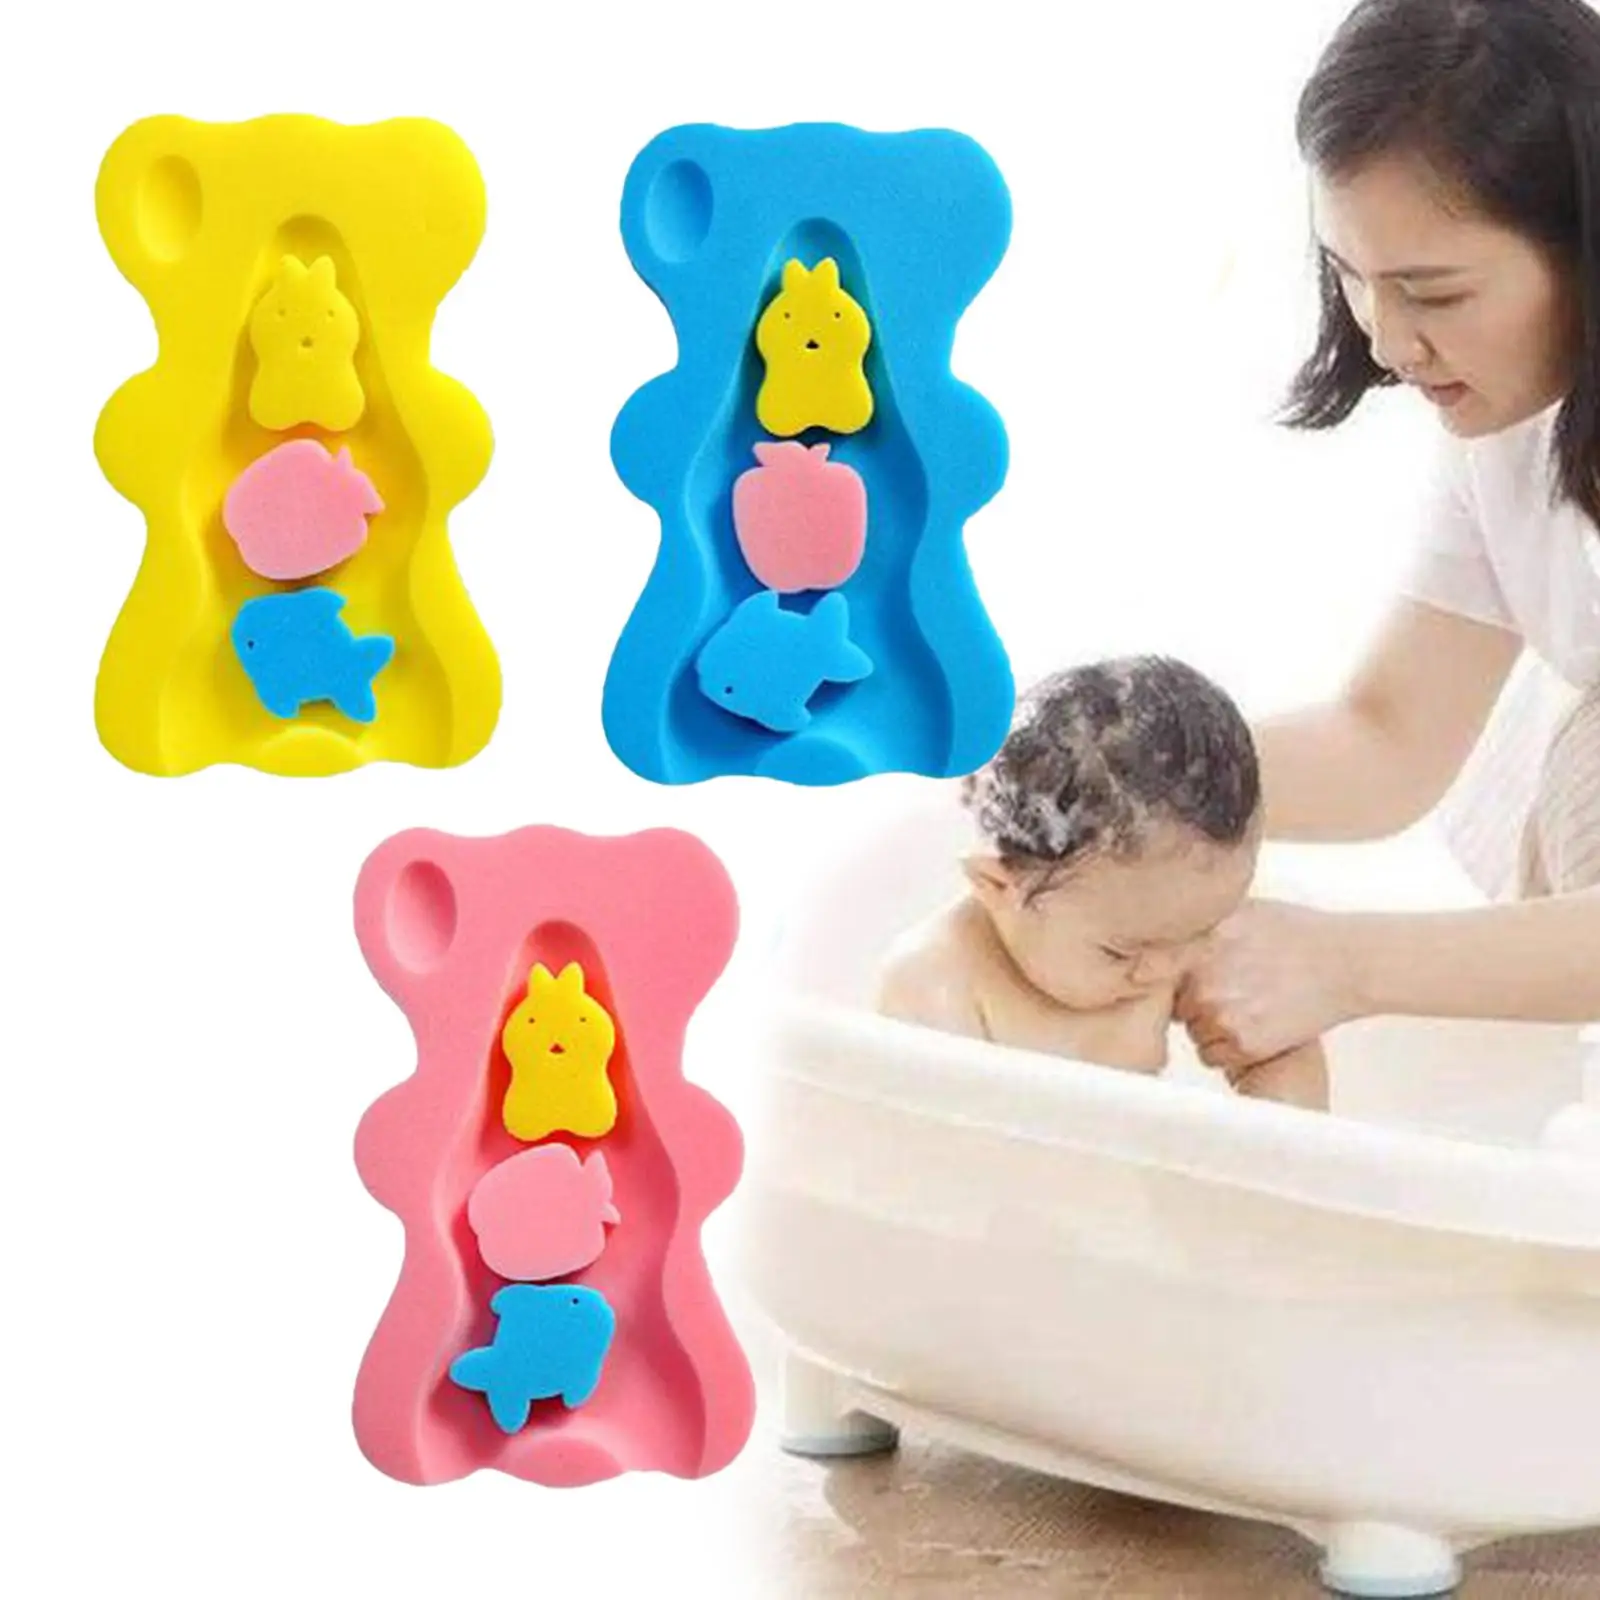  Mat Bath Sponge Foldable Infant Pad for Toddlers Bathtub Newborn